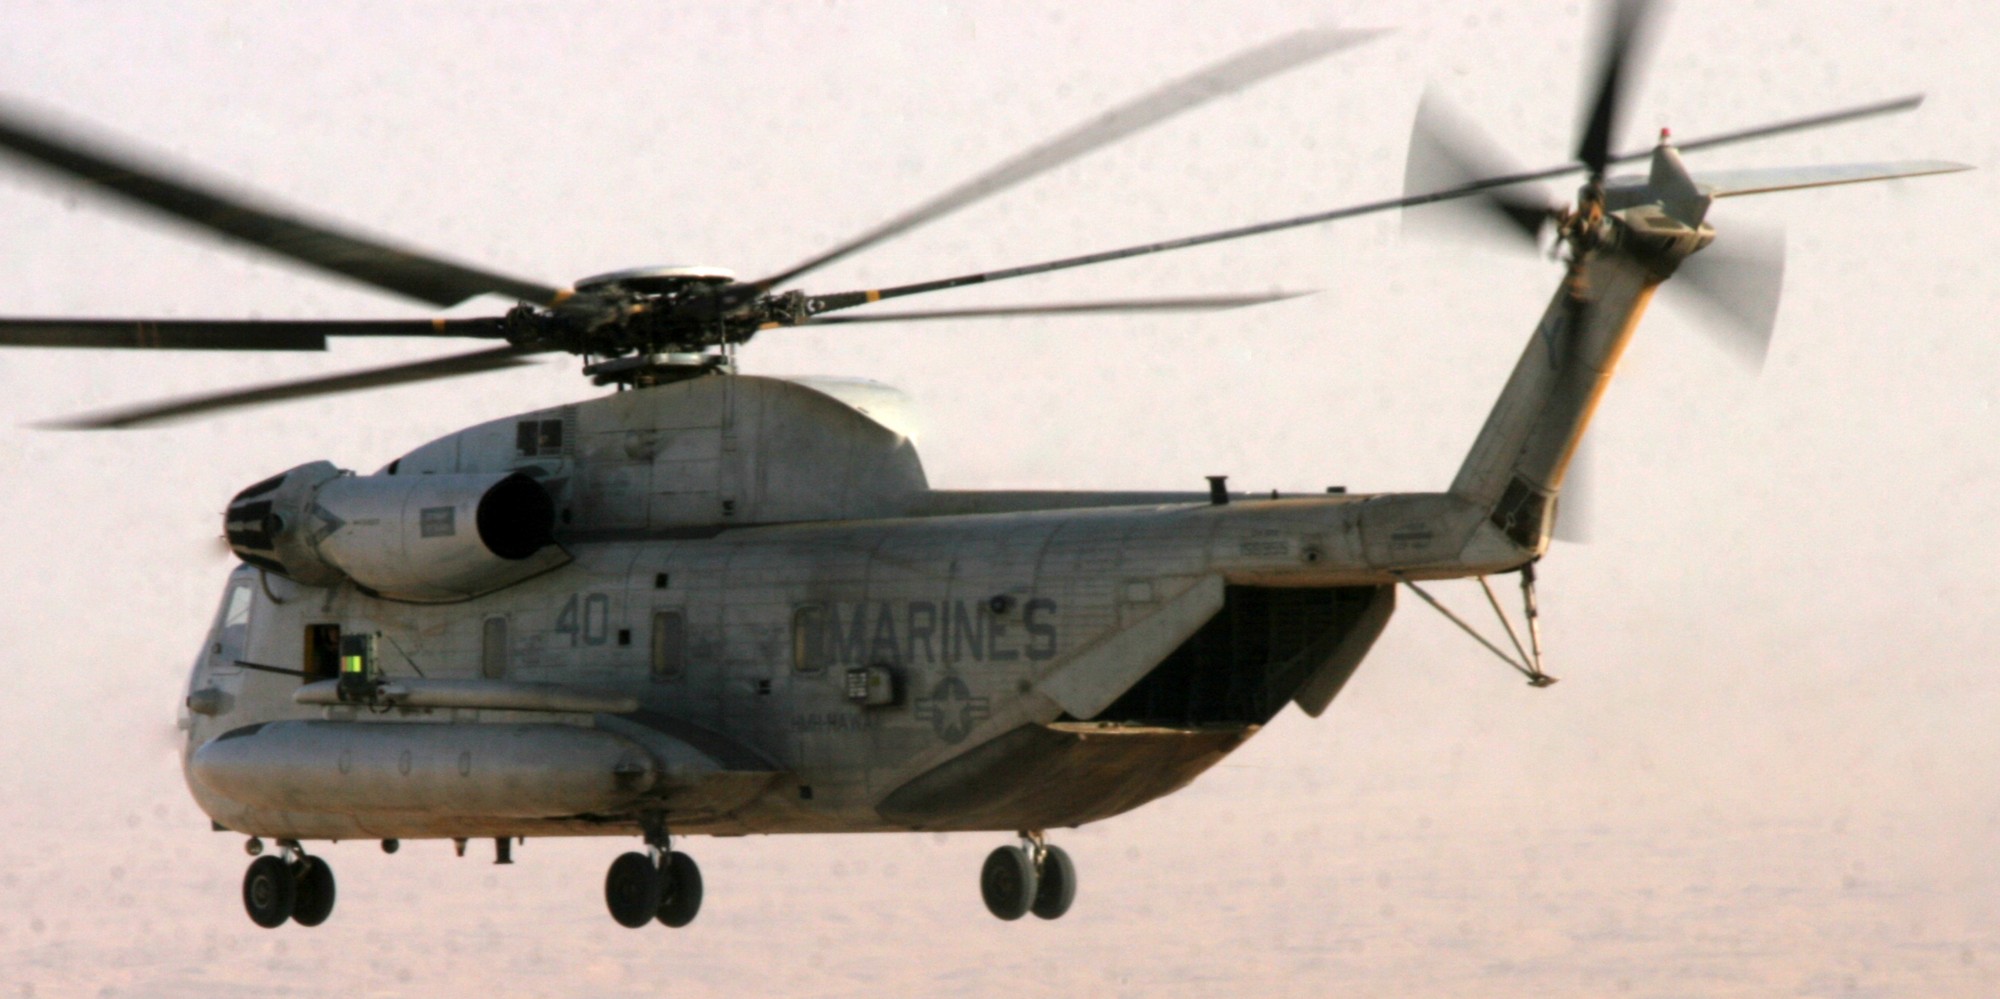 hmh-363 red lions marine heavy helicopter squadron usmc sikorsky ch-53d sea stallion 25 al asad iraq